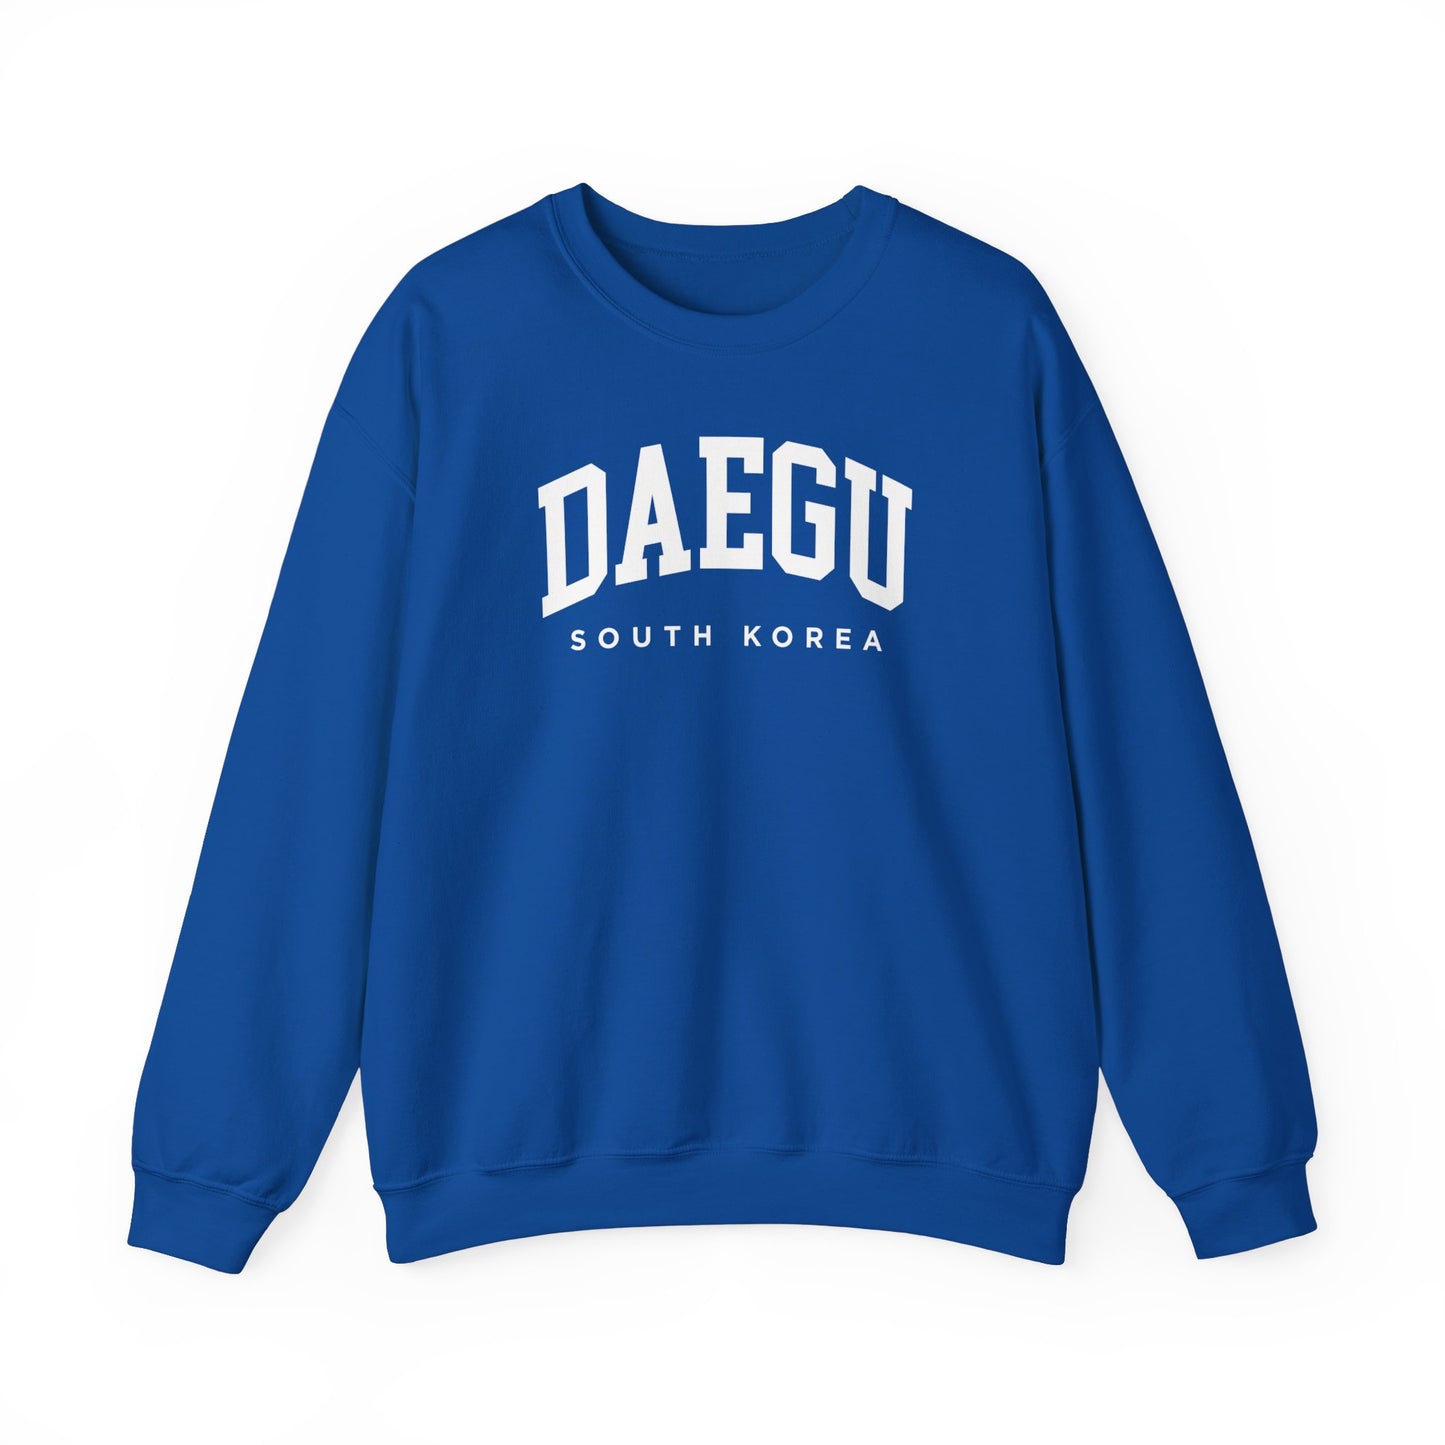 Daegu South Korea Sweatshirt